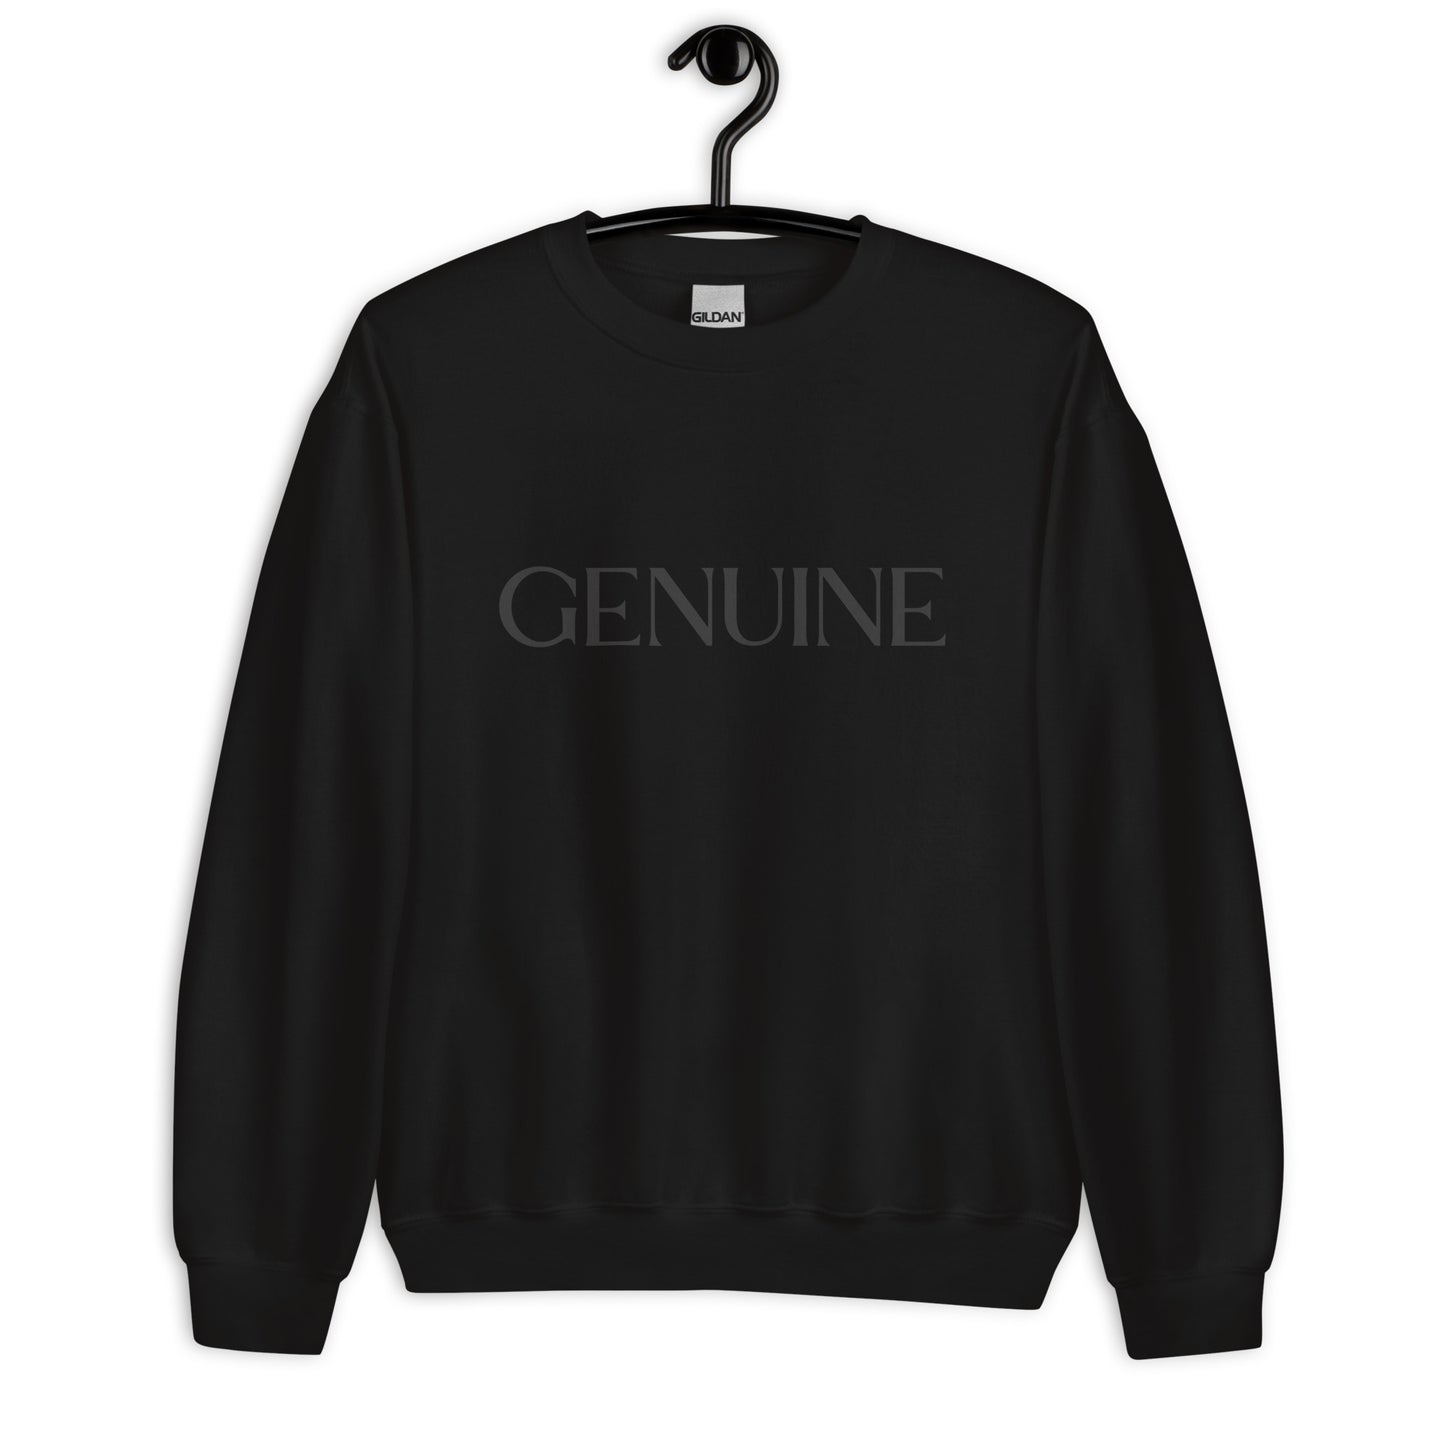 Genuine- Sweatshirt